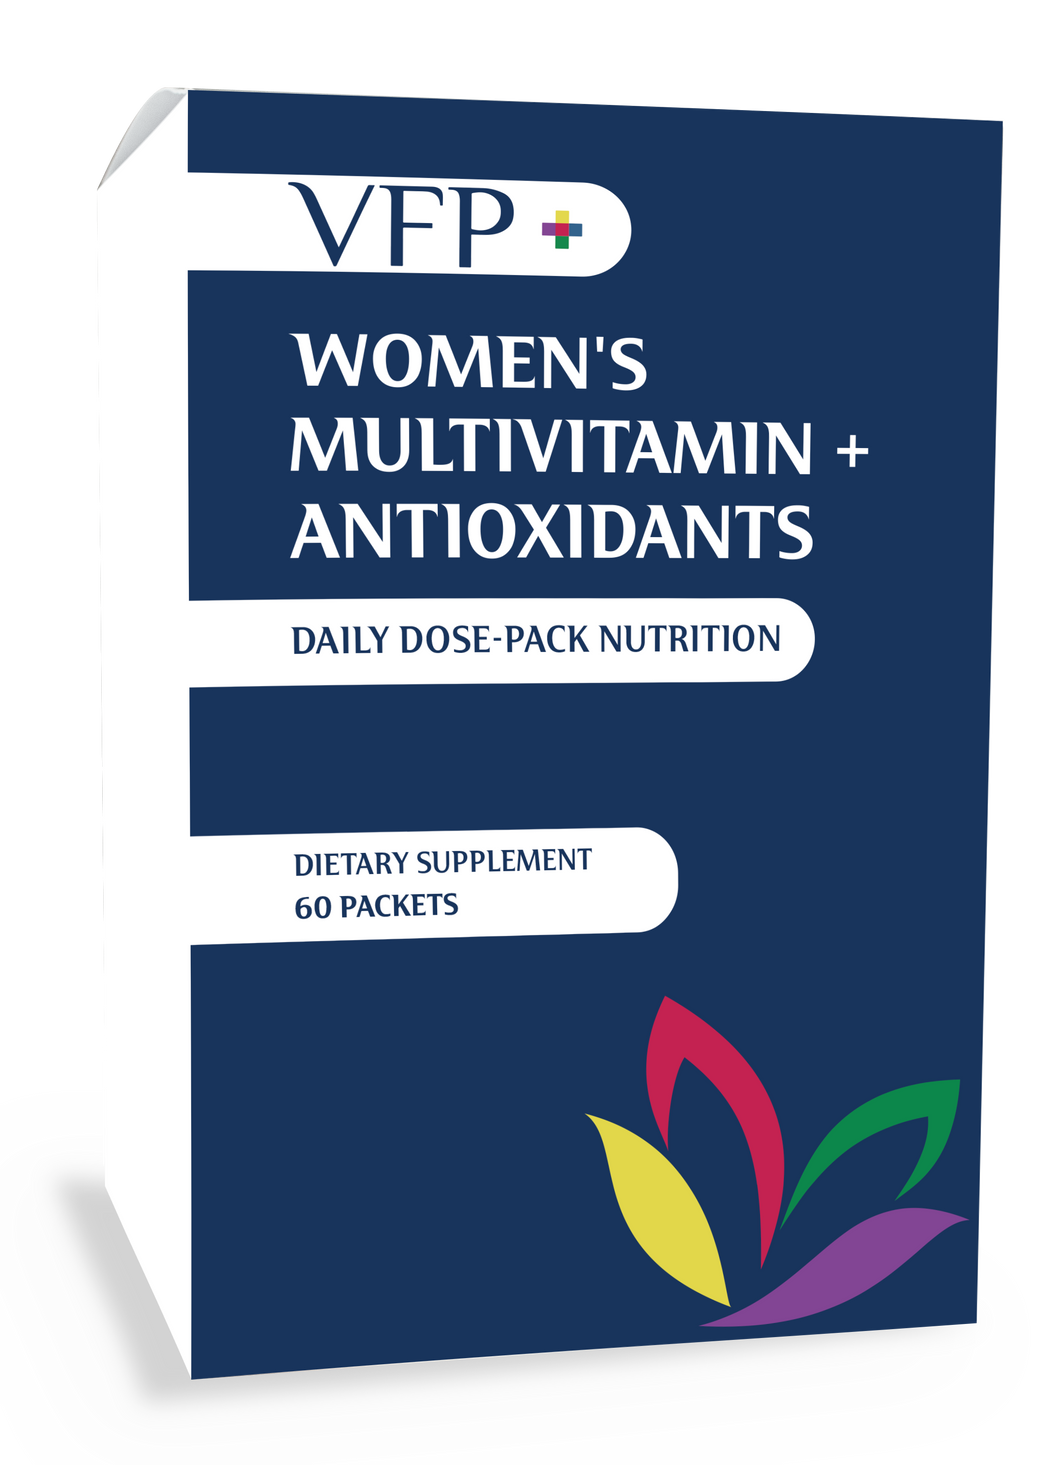 Women's Multivitamin + Antioxidants.